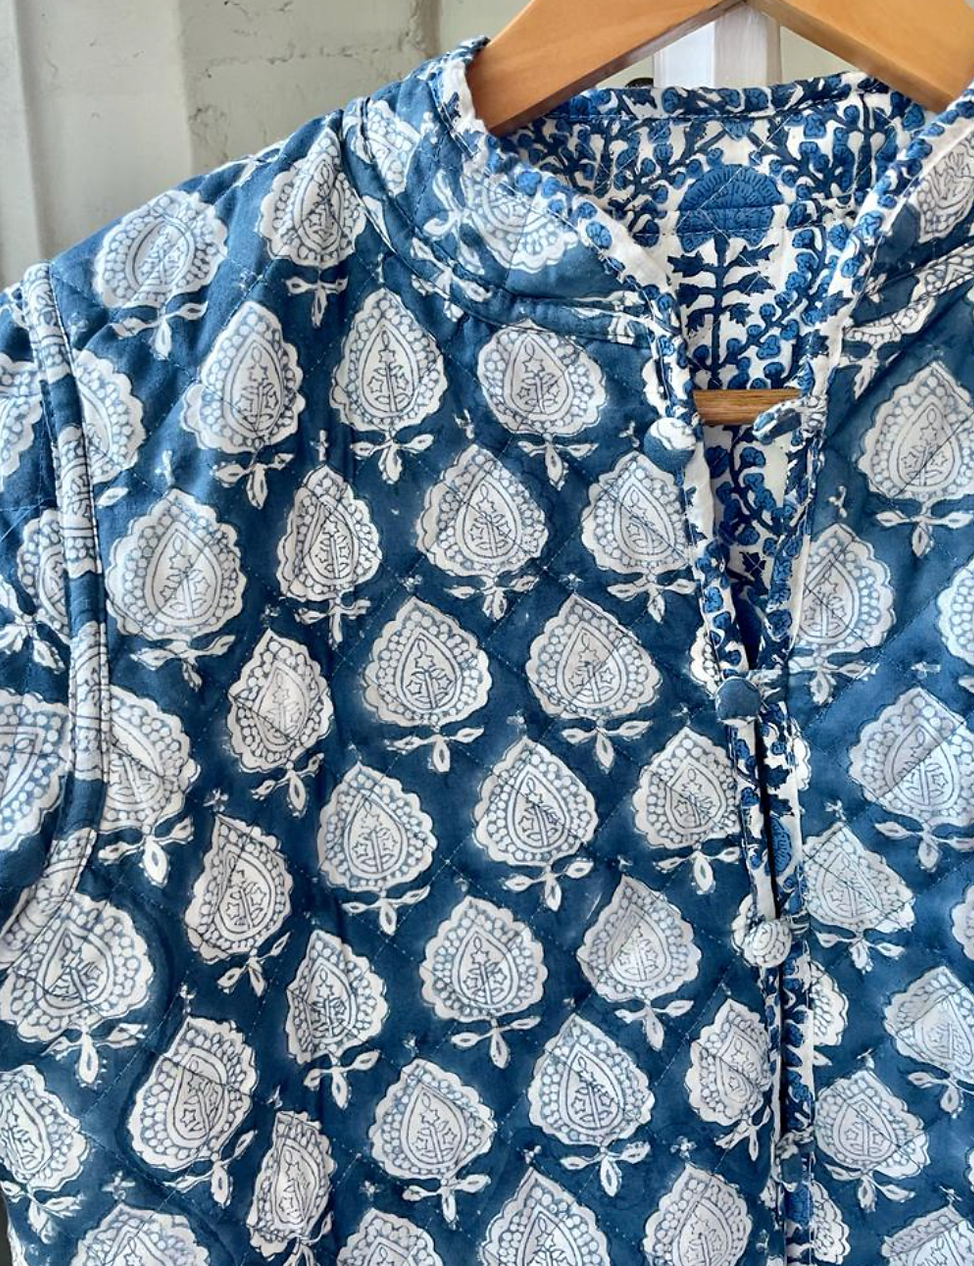 Hetre Alresford Hampshire Clothe Store KaHo Blue Trellis Quilted Jacket